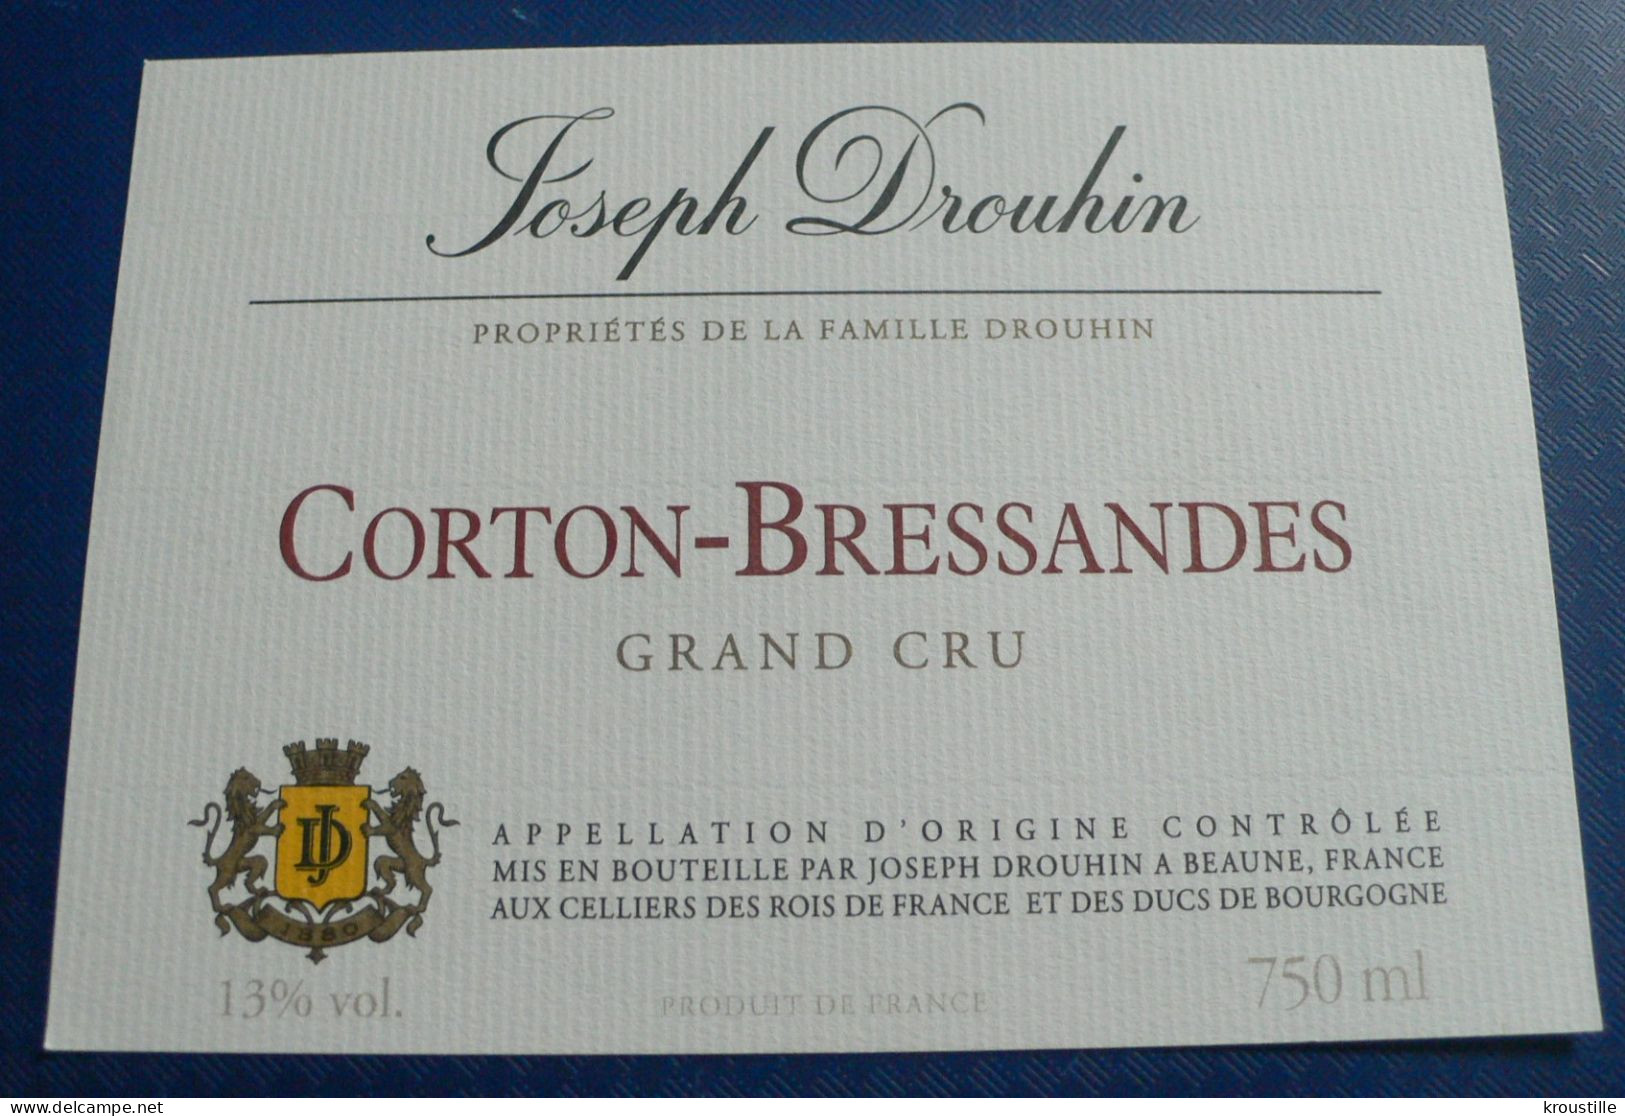 CORTON-BRESSANDES GRANC CRU JOSEPH DROUHIN - ETIQUETTE BOURGOGNE NEUVE - Bourgogne